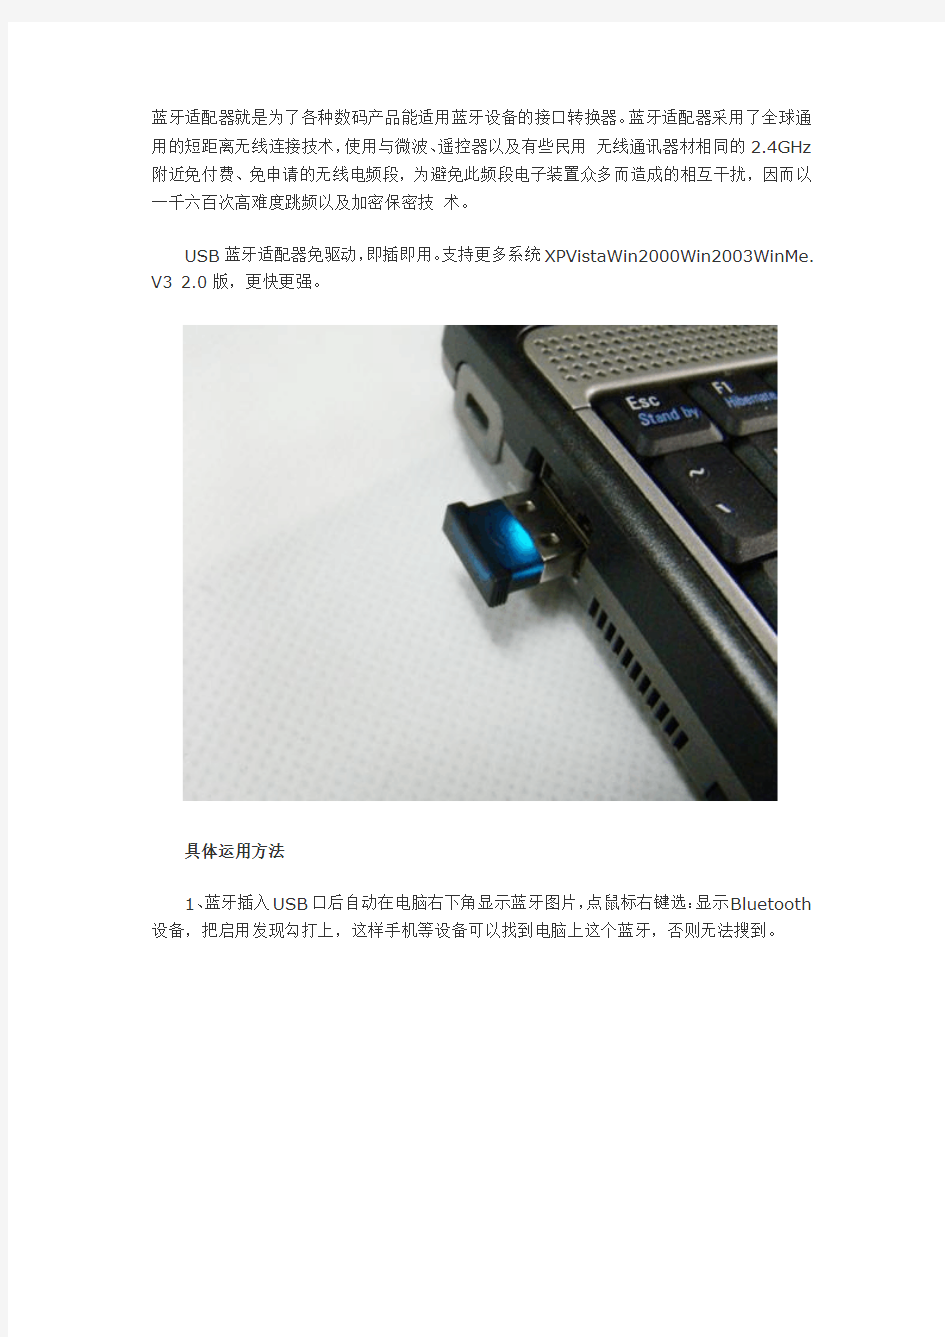 USB蓝牙适配器配器使用操作方法